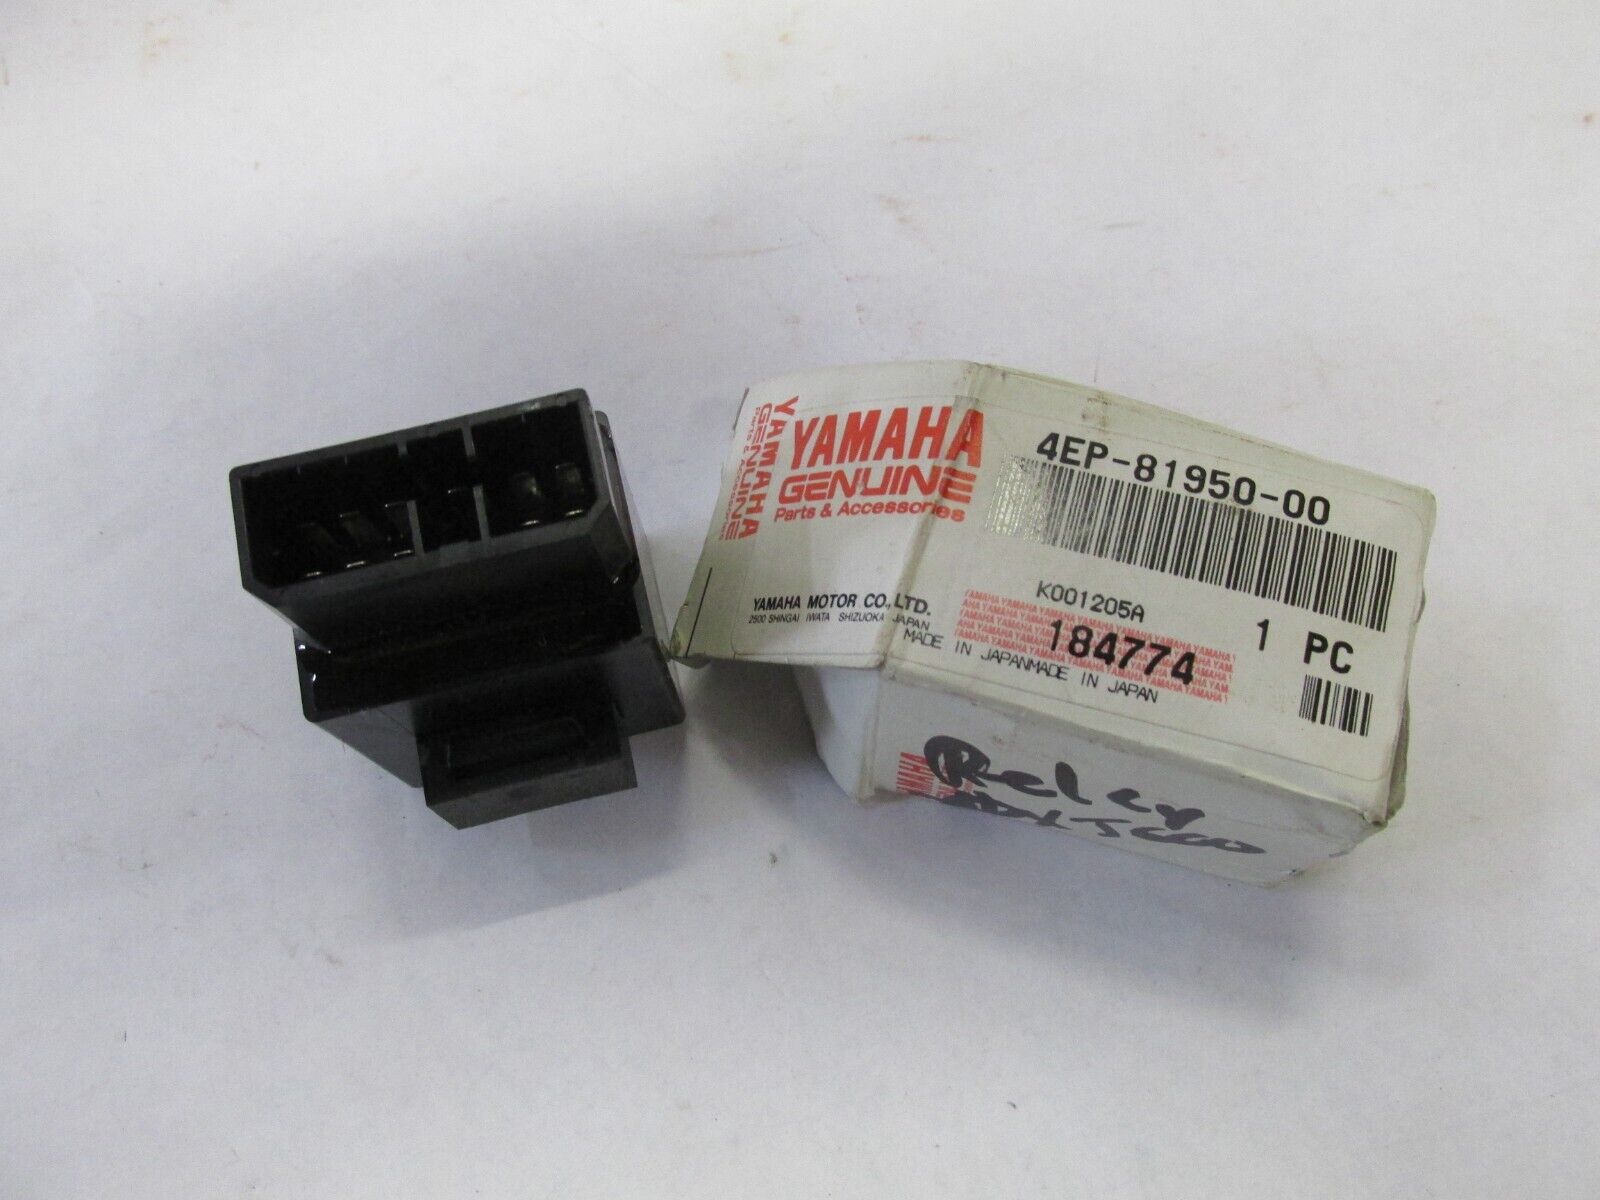 NOS Yamaha Seca II Electrical Relay Switch 4EP-81950-00-00 97-98